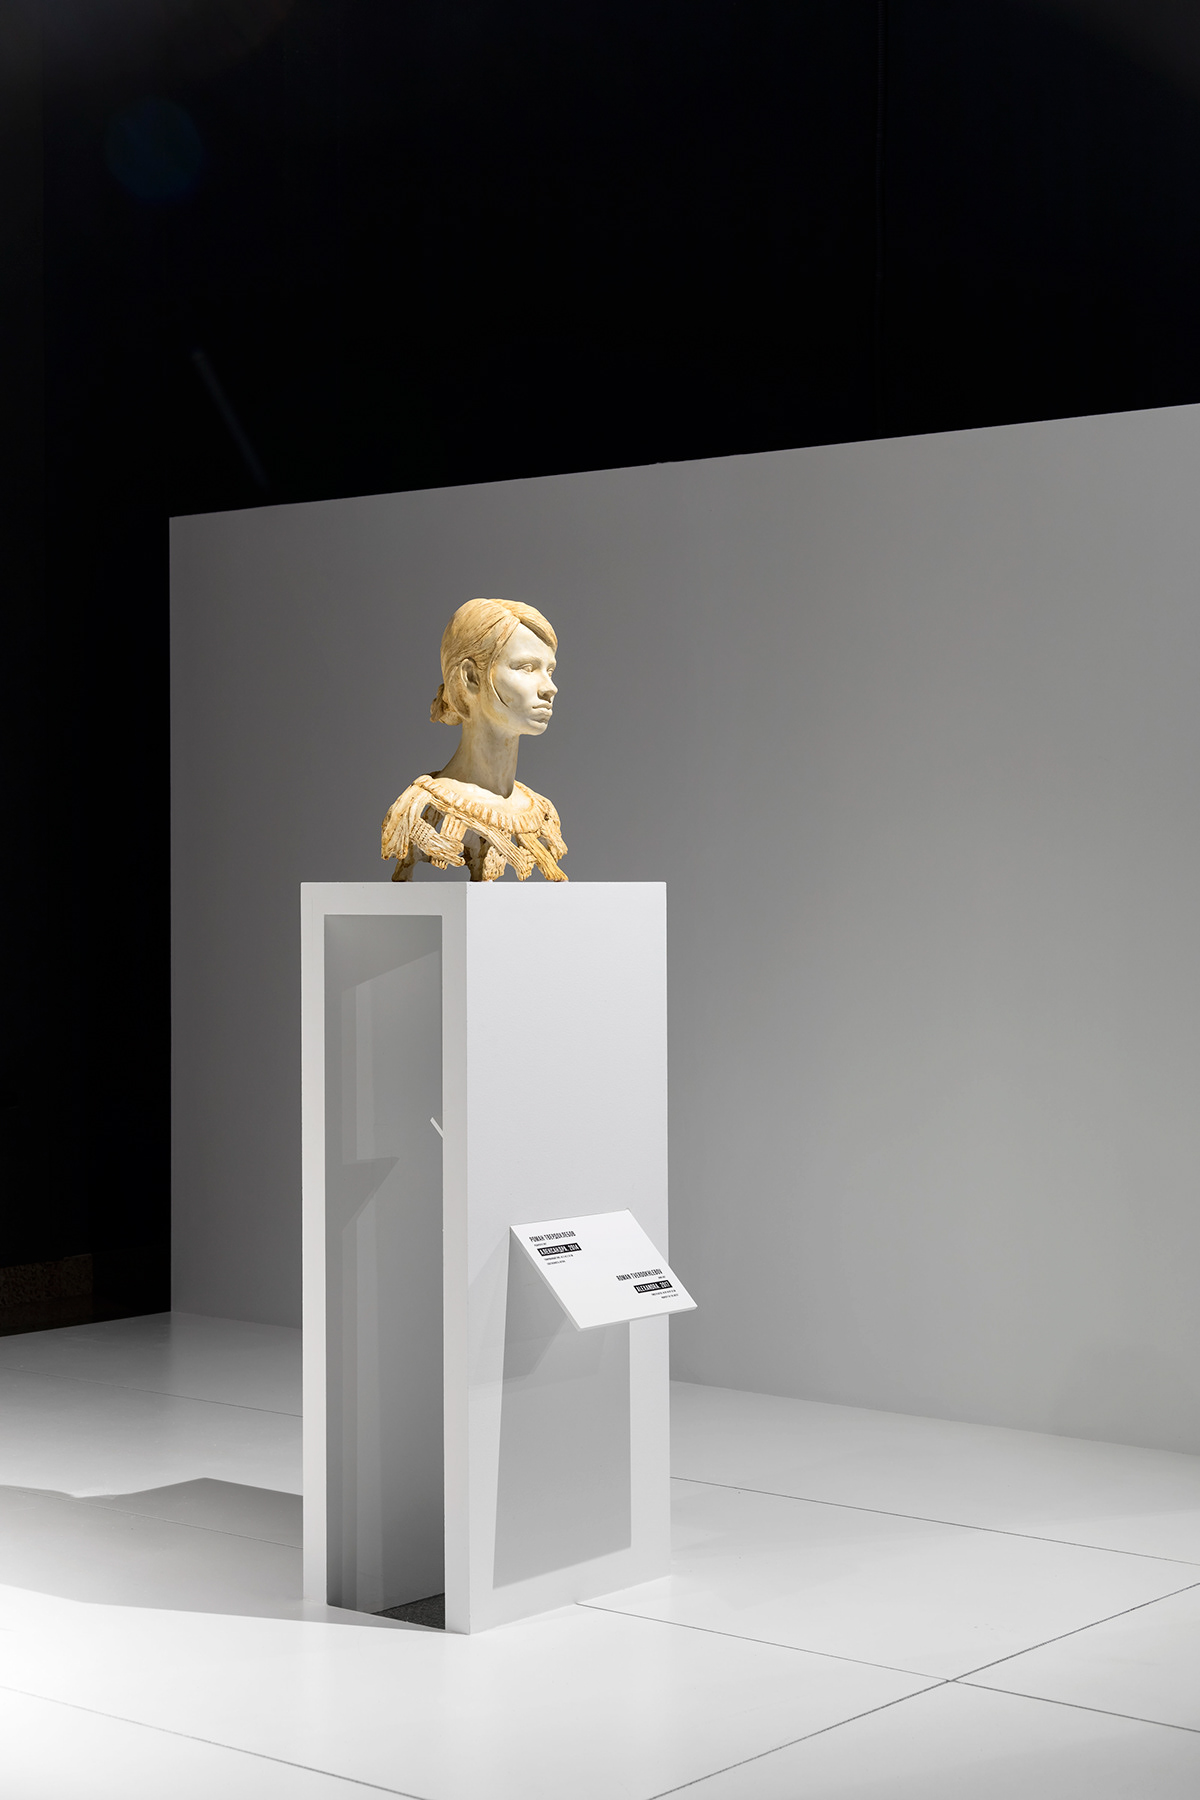 Sculpture portrait in exhibition